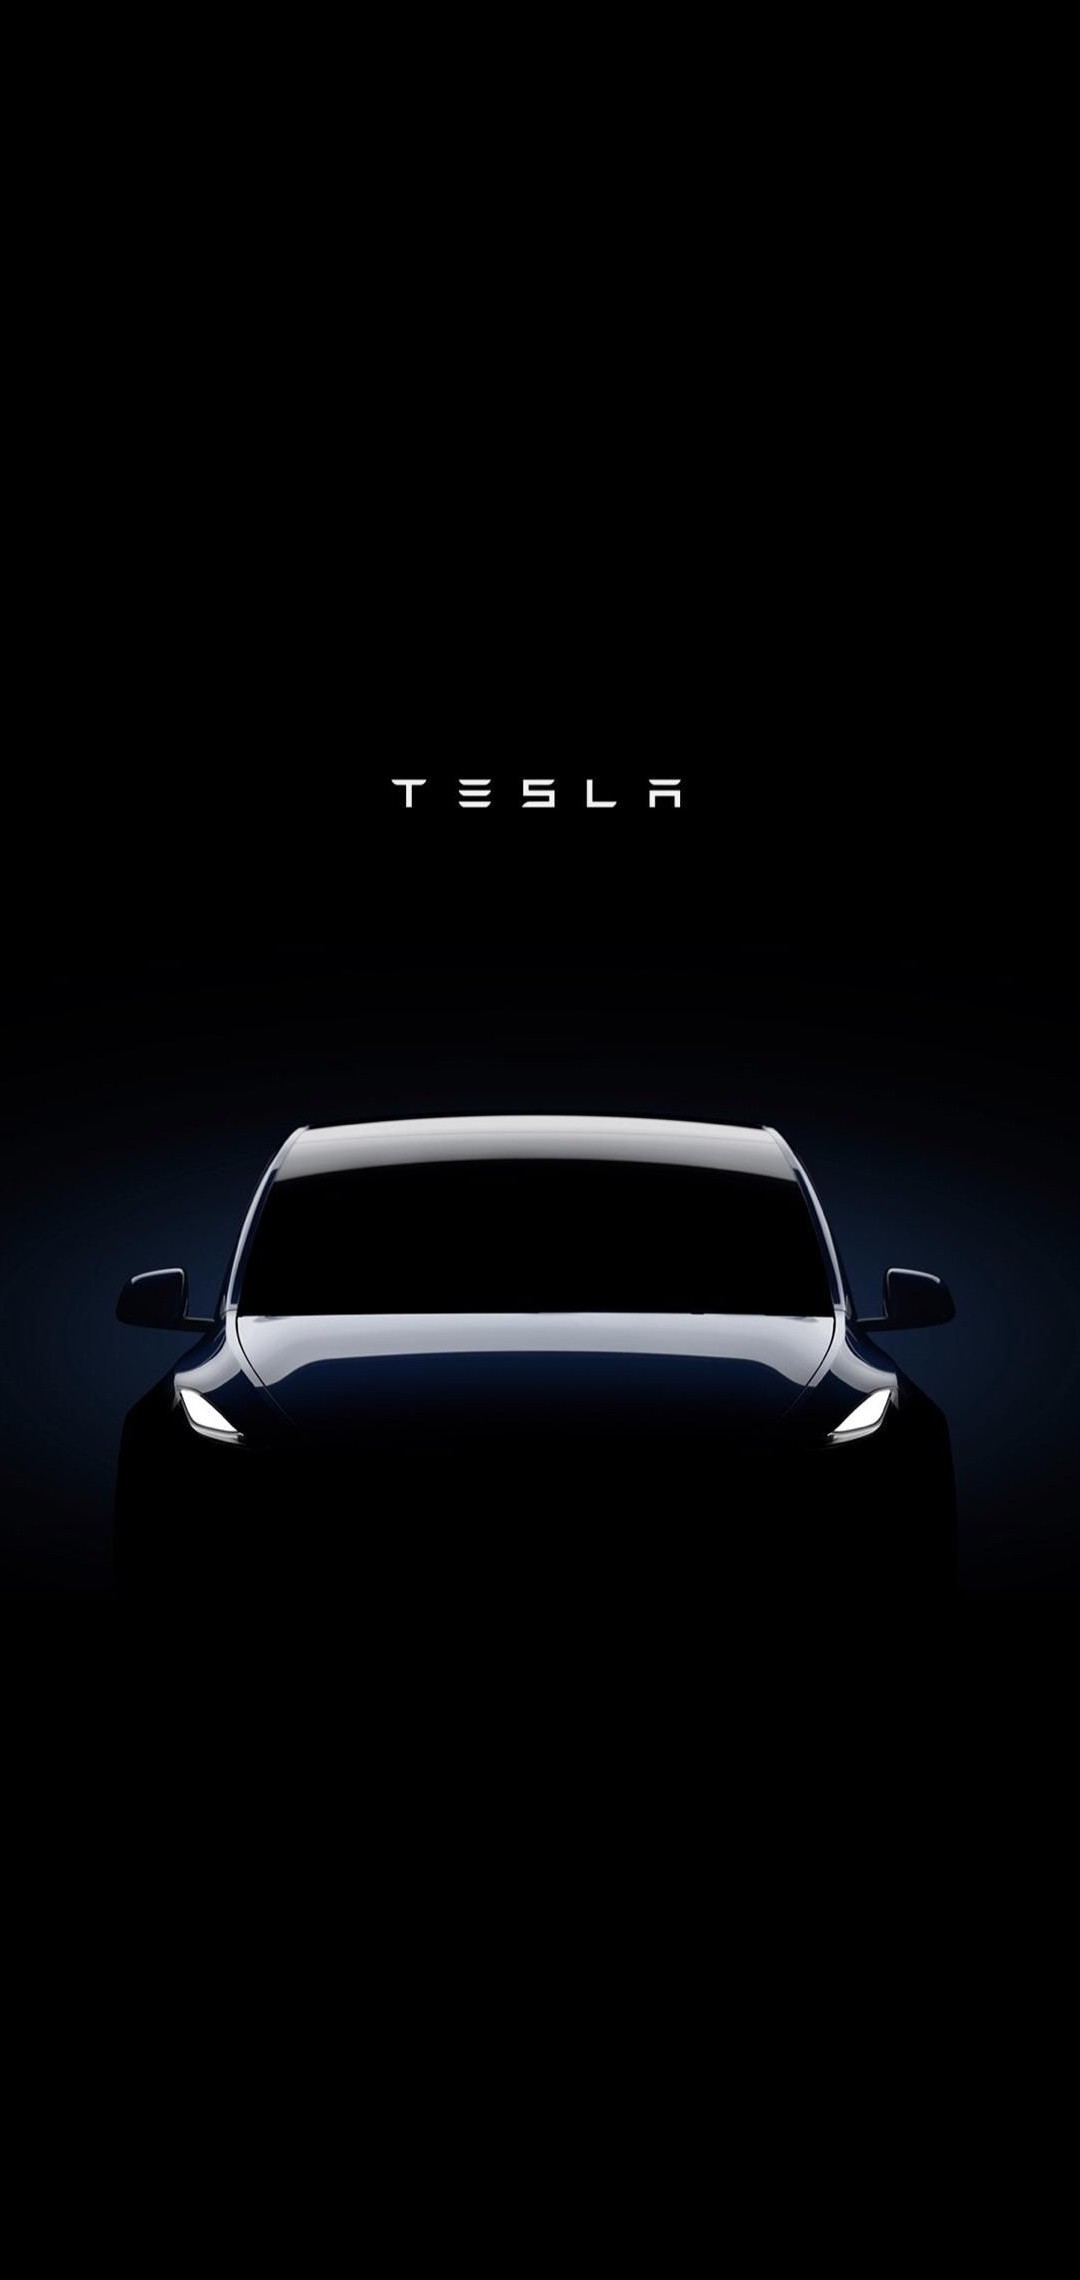 Tesla 車 Aquos Sense4 Basic Androidスマホ壁紙 待ち受け スマラン